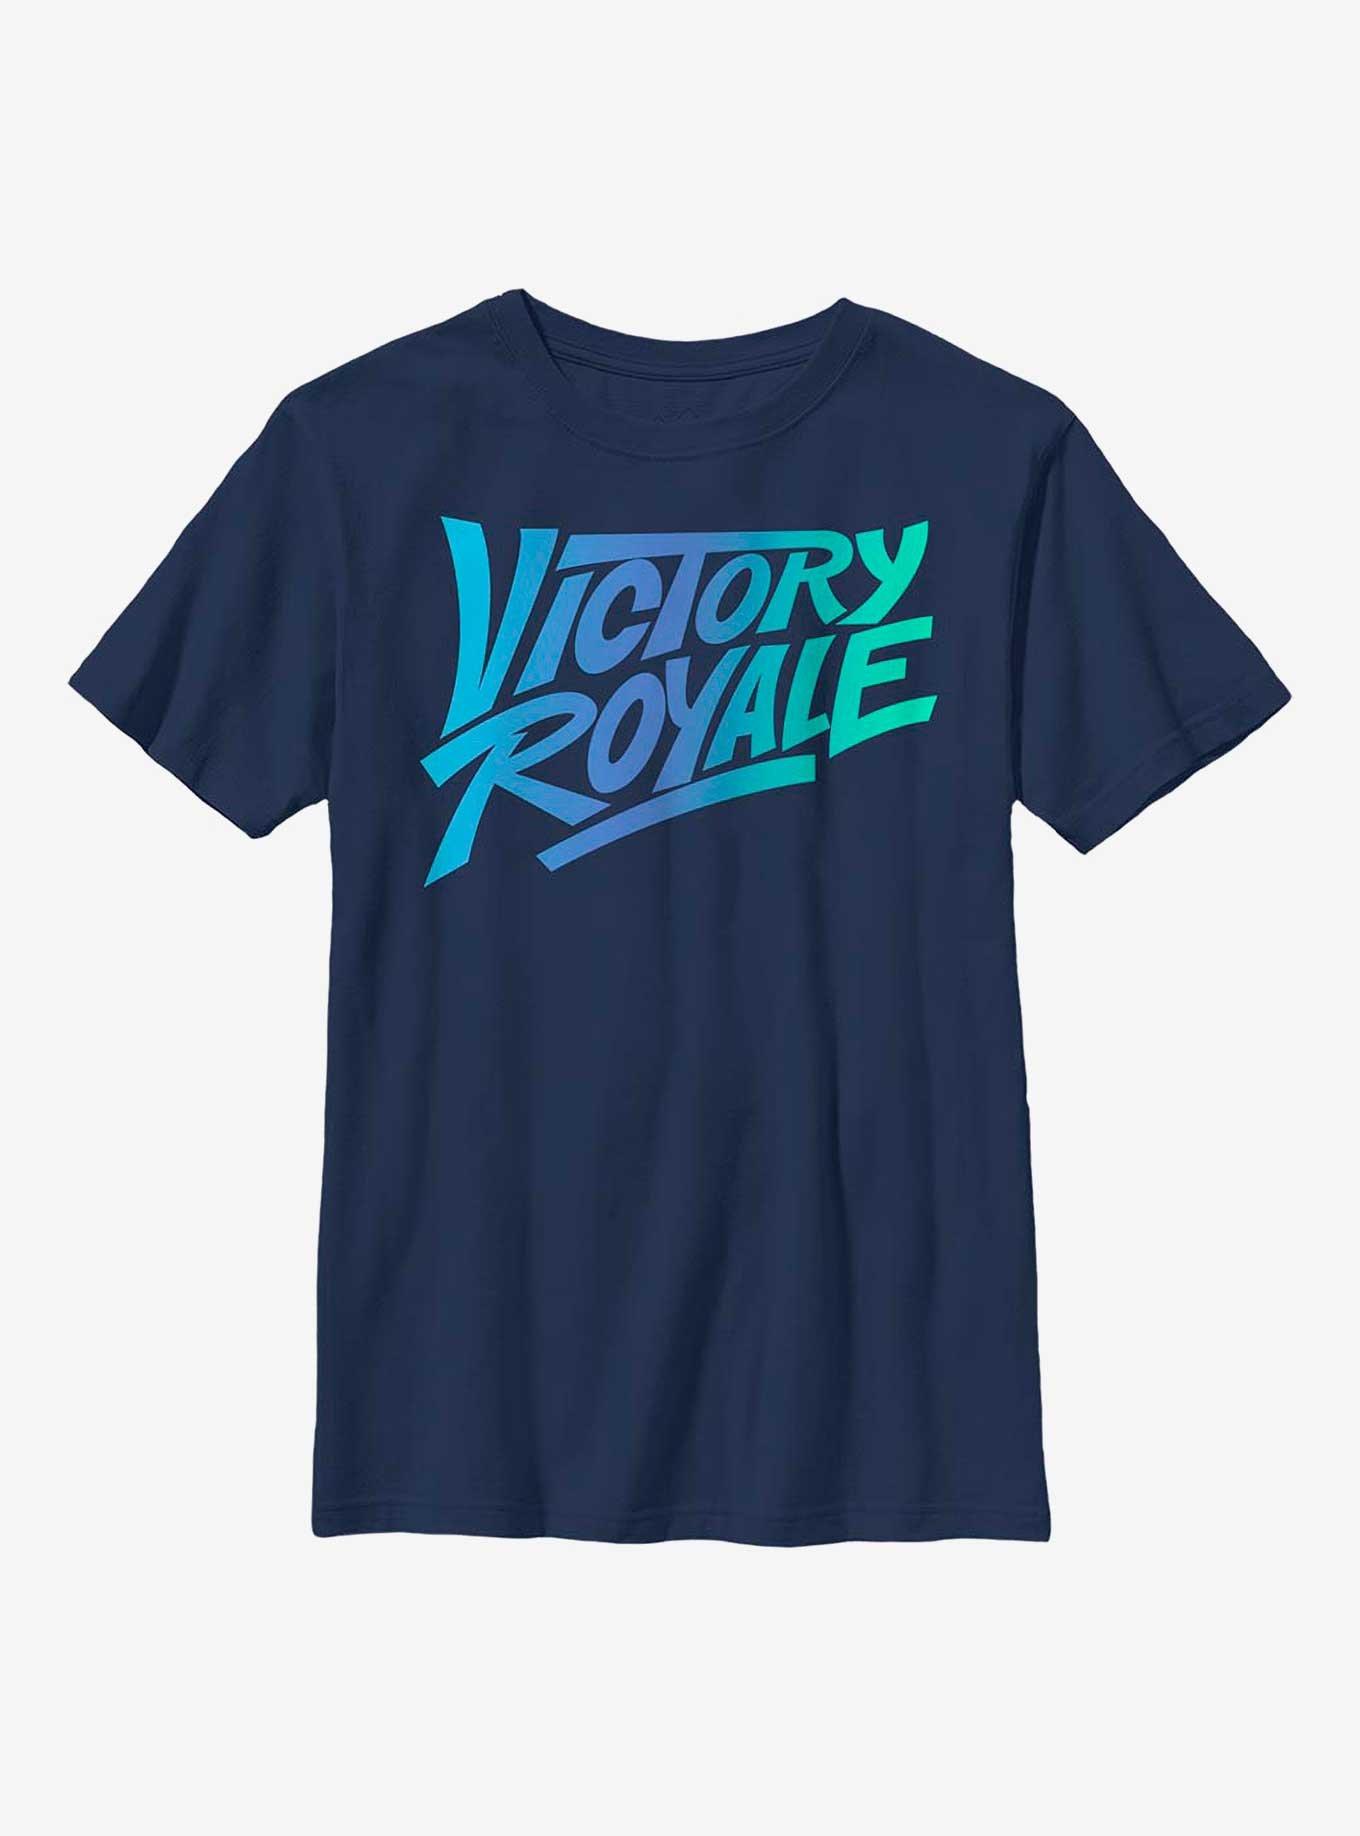 Fortnite Victory Royale Logo Youth T-Shirt, NAVY, hi-res